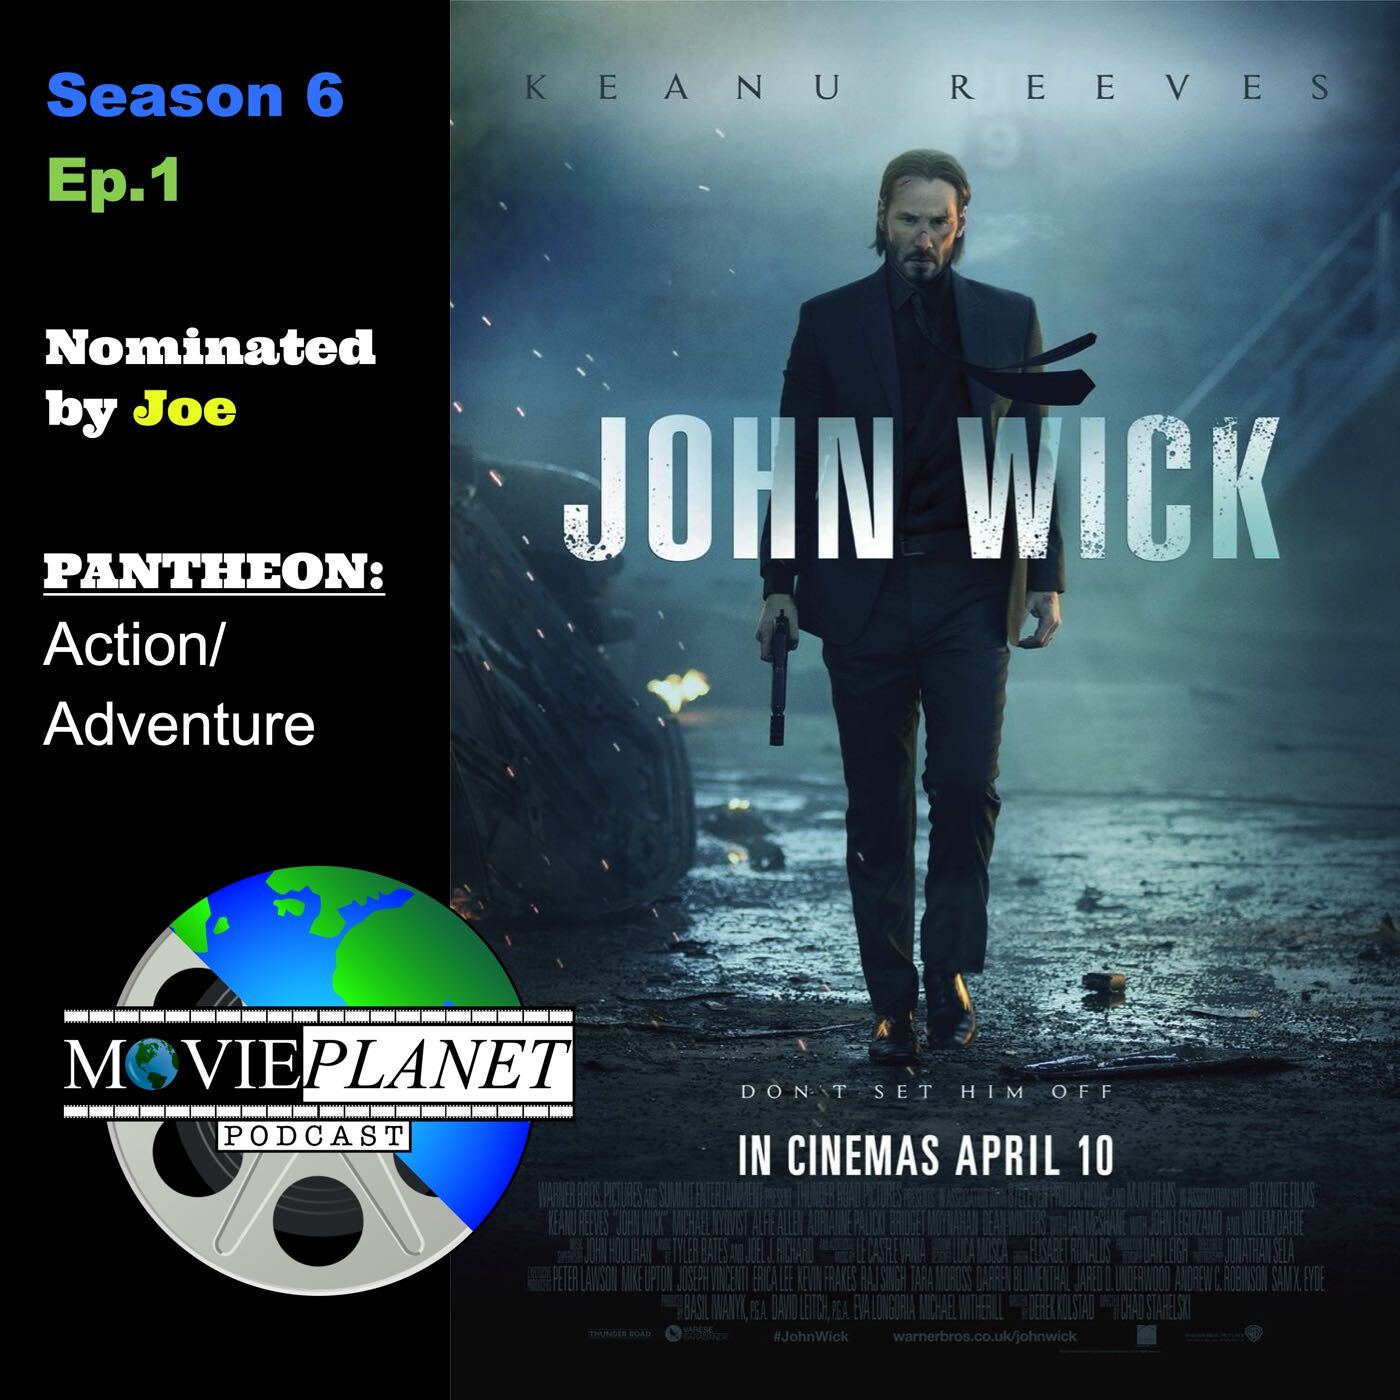 John Wick (2014)  Movie Planet Podcast